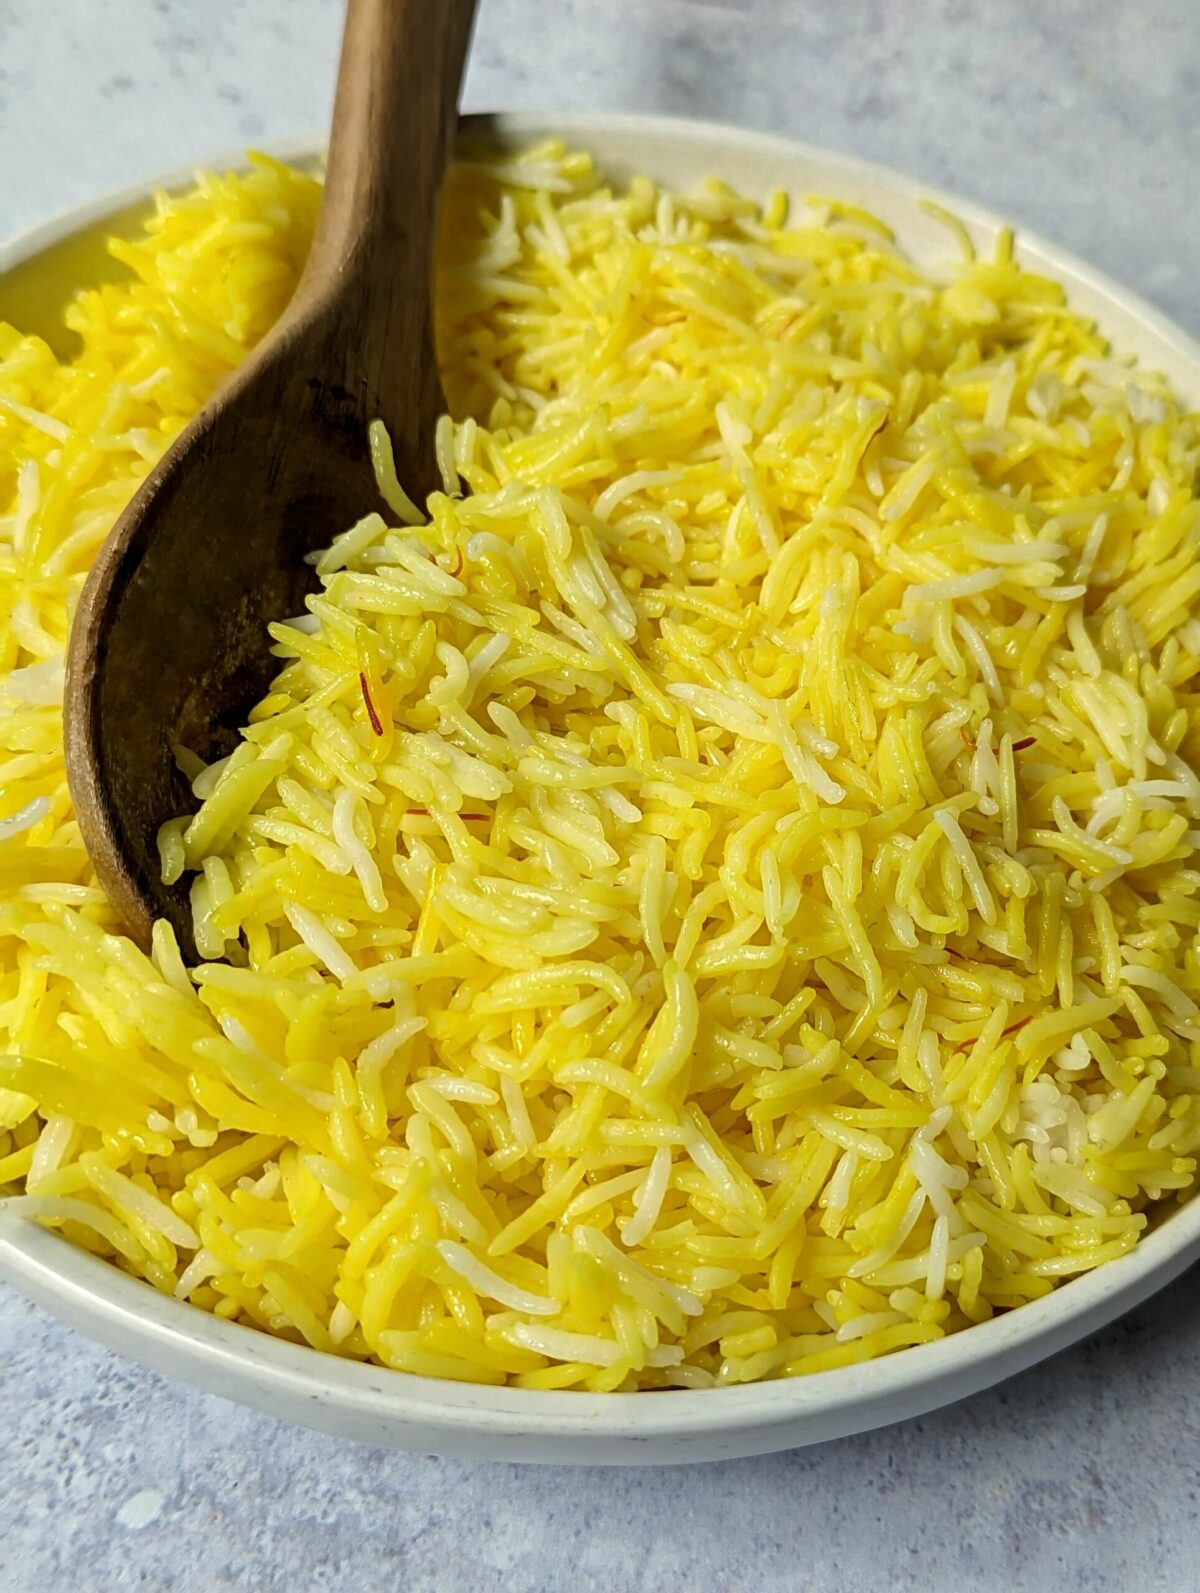 A close up of a serving bowl of saffron rice.